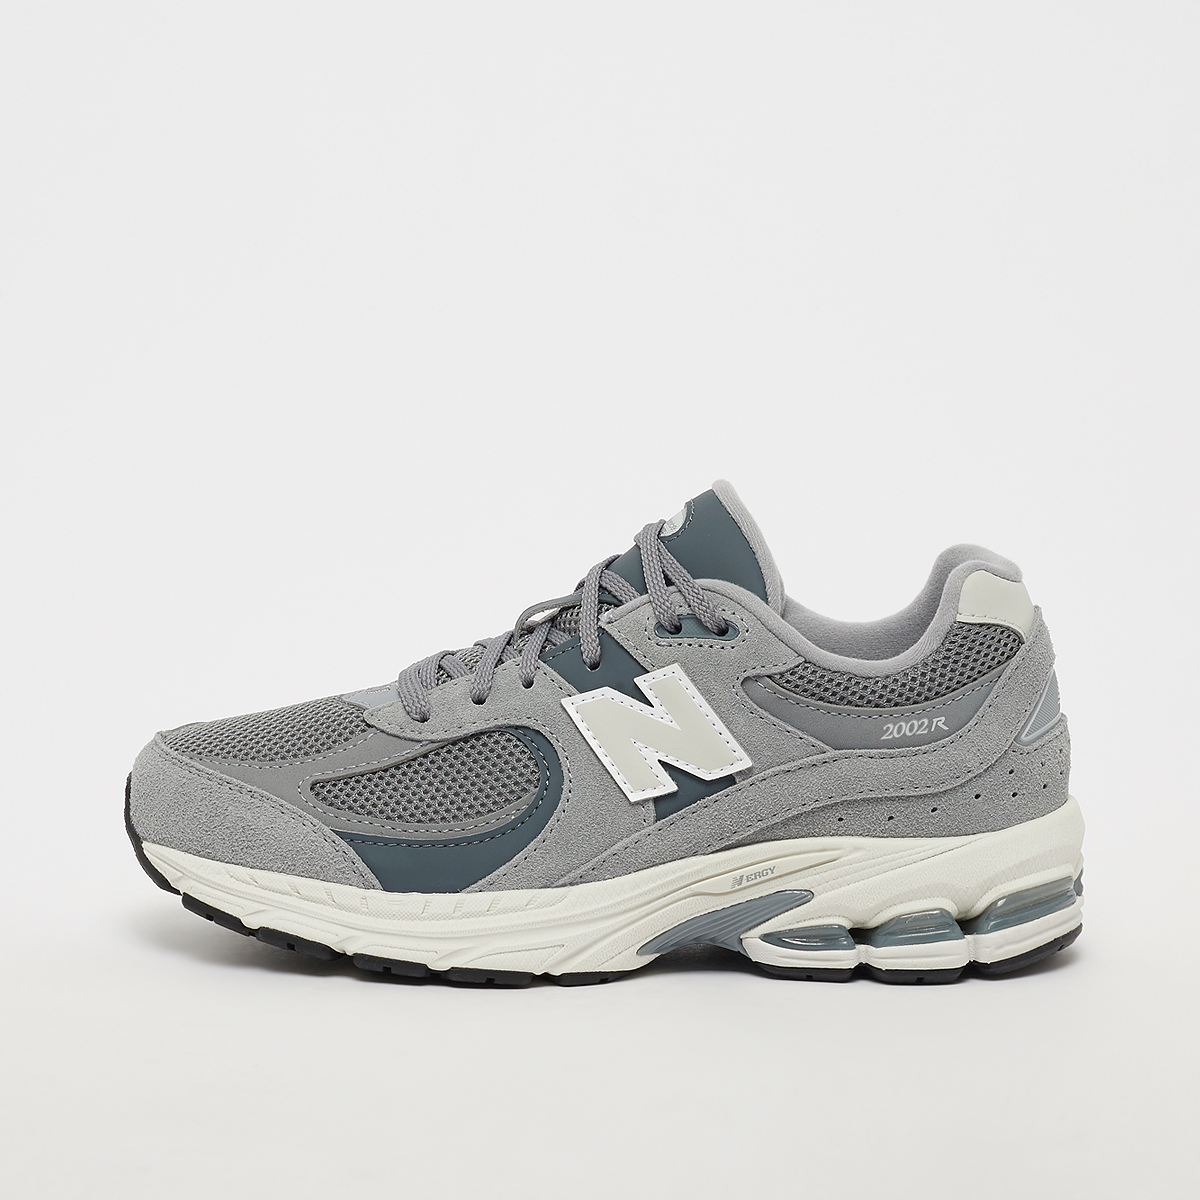 2002R (GS), New Balance, Footwear, steel, taille: 37